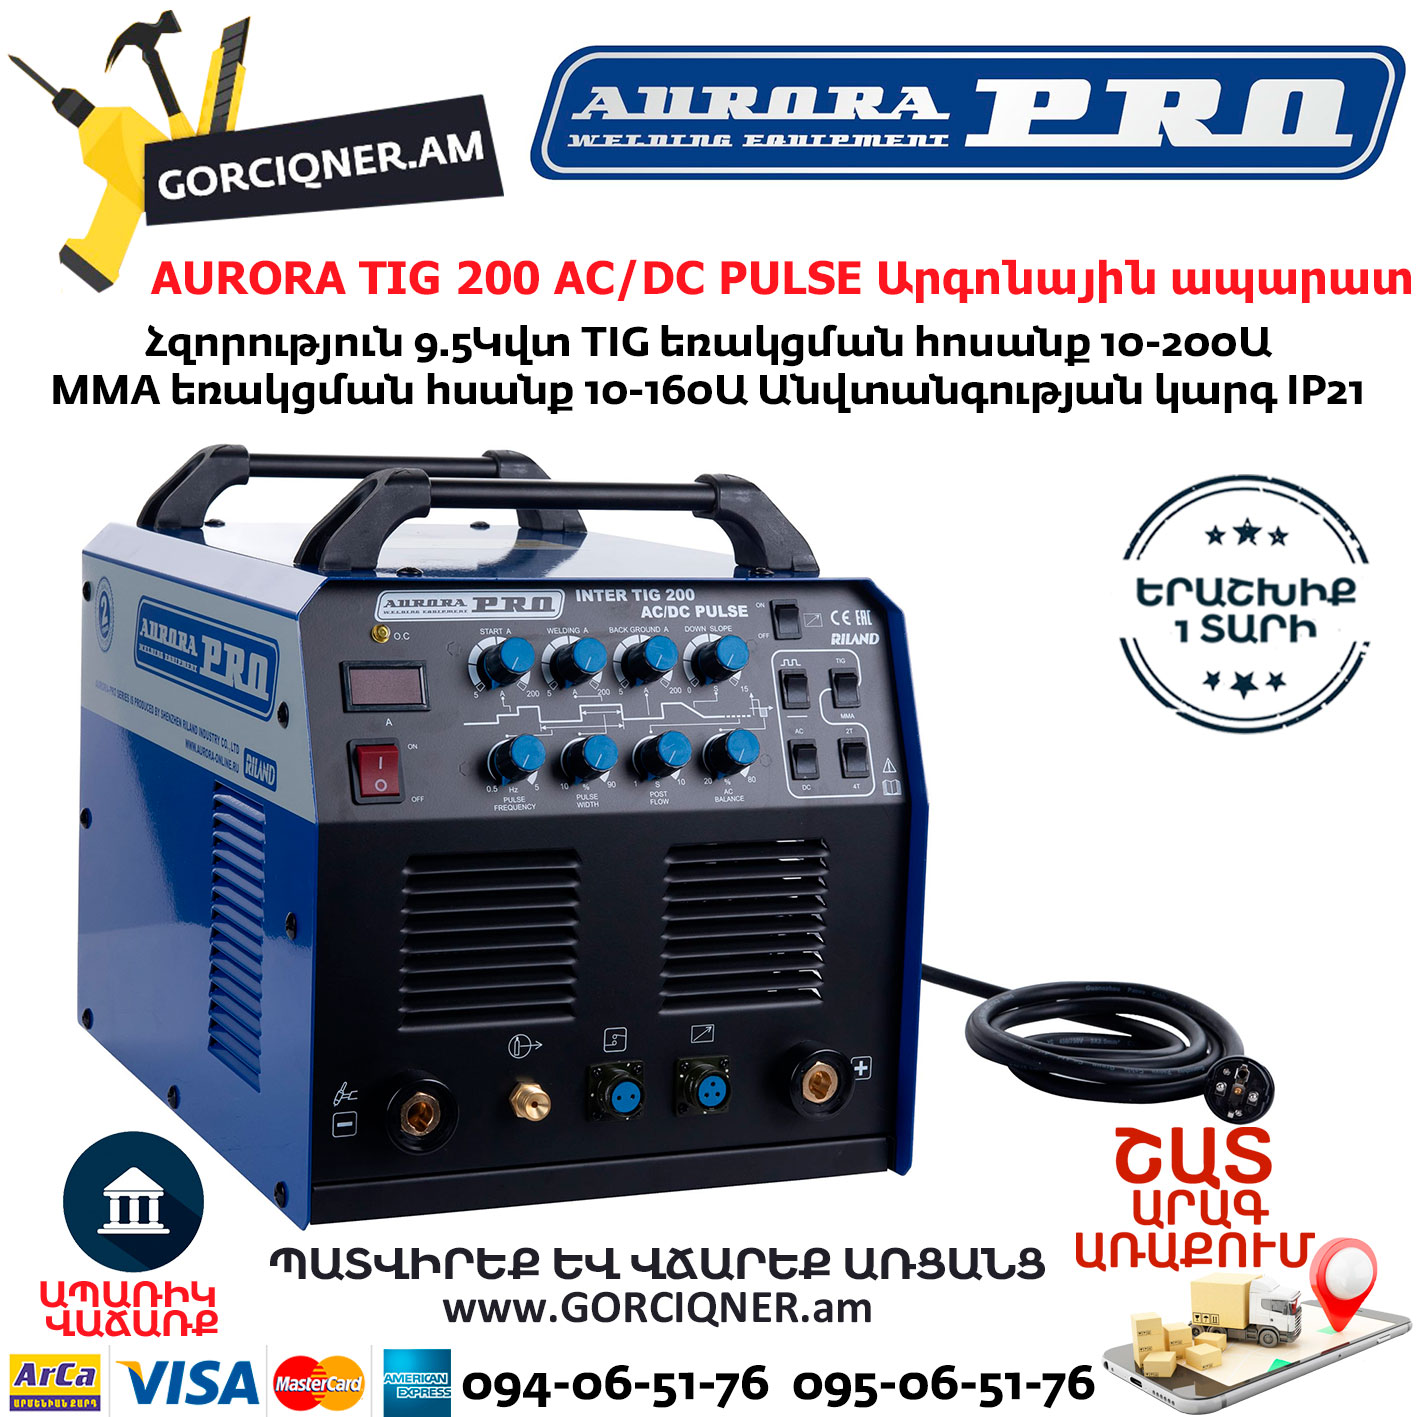 Aurora pro inter tig 200 pulse. Aurora Pro Inter Tig 200 AC/DC Pulse. Inter Tig 200 AC DC.